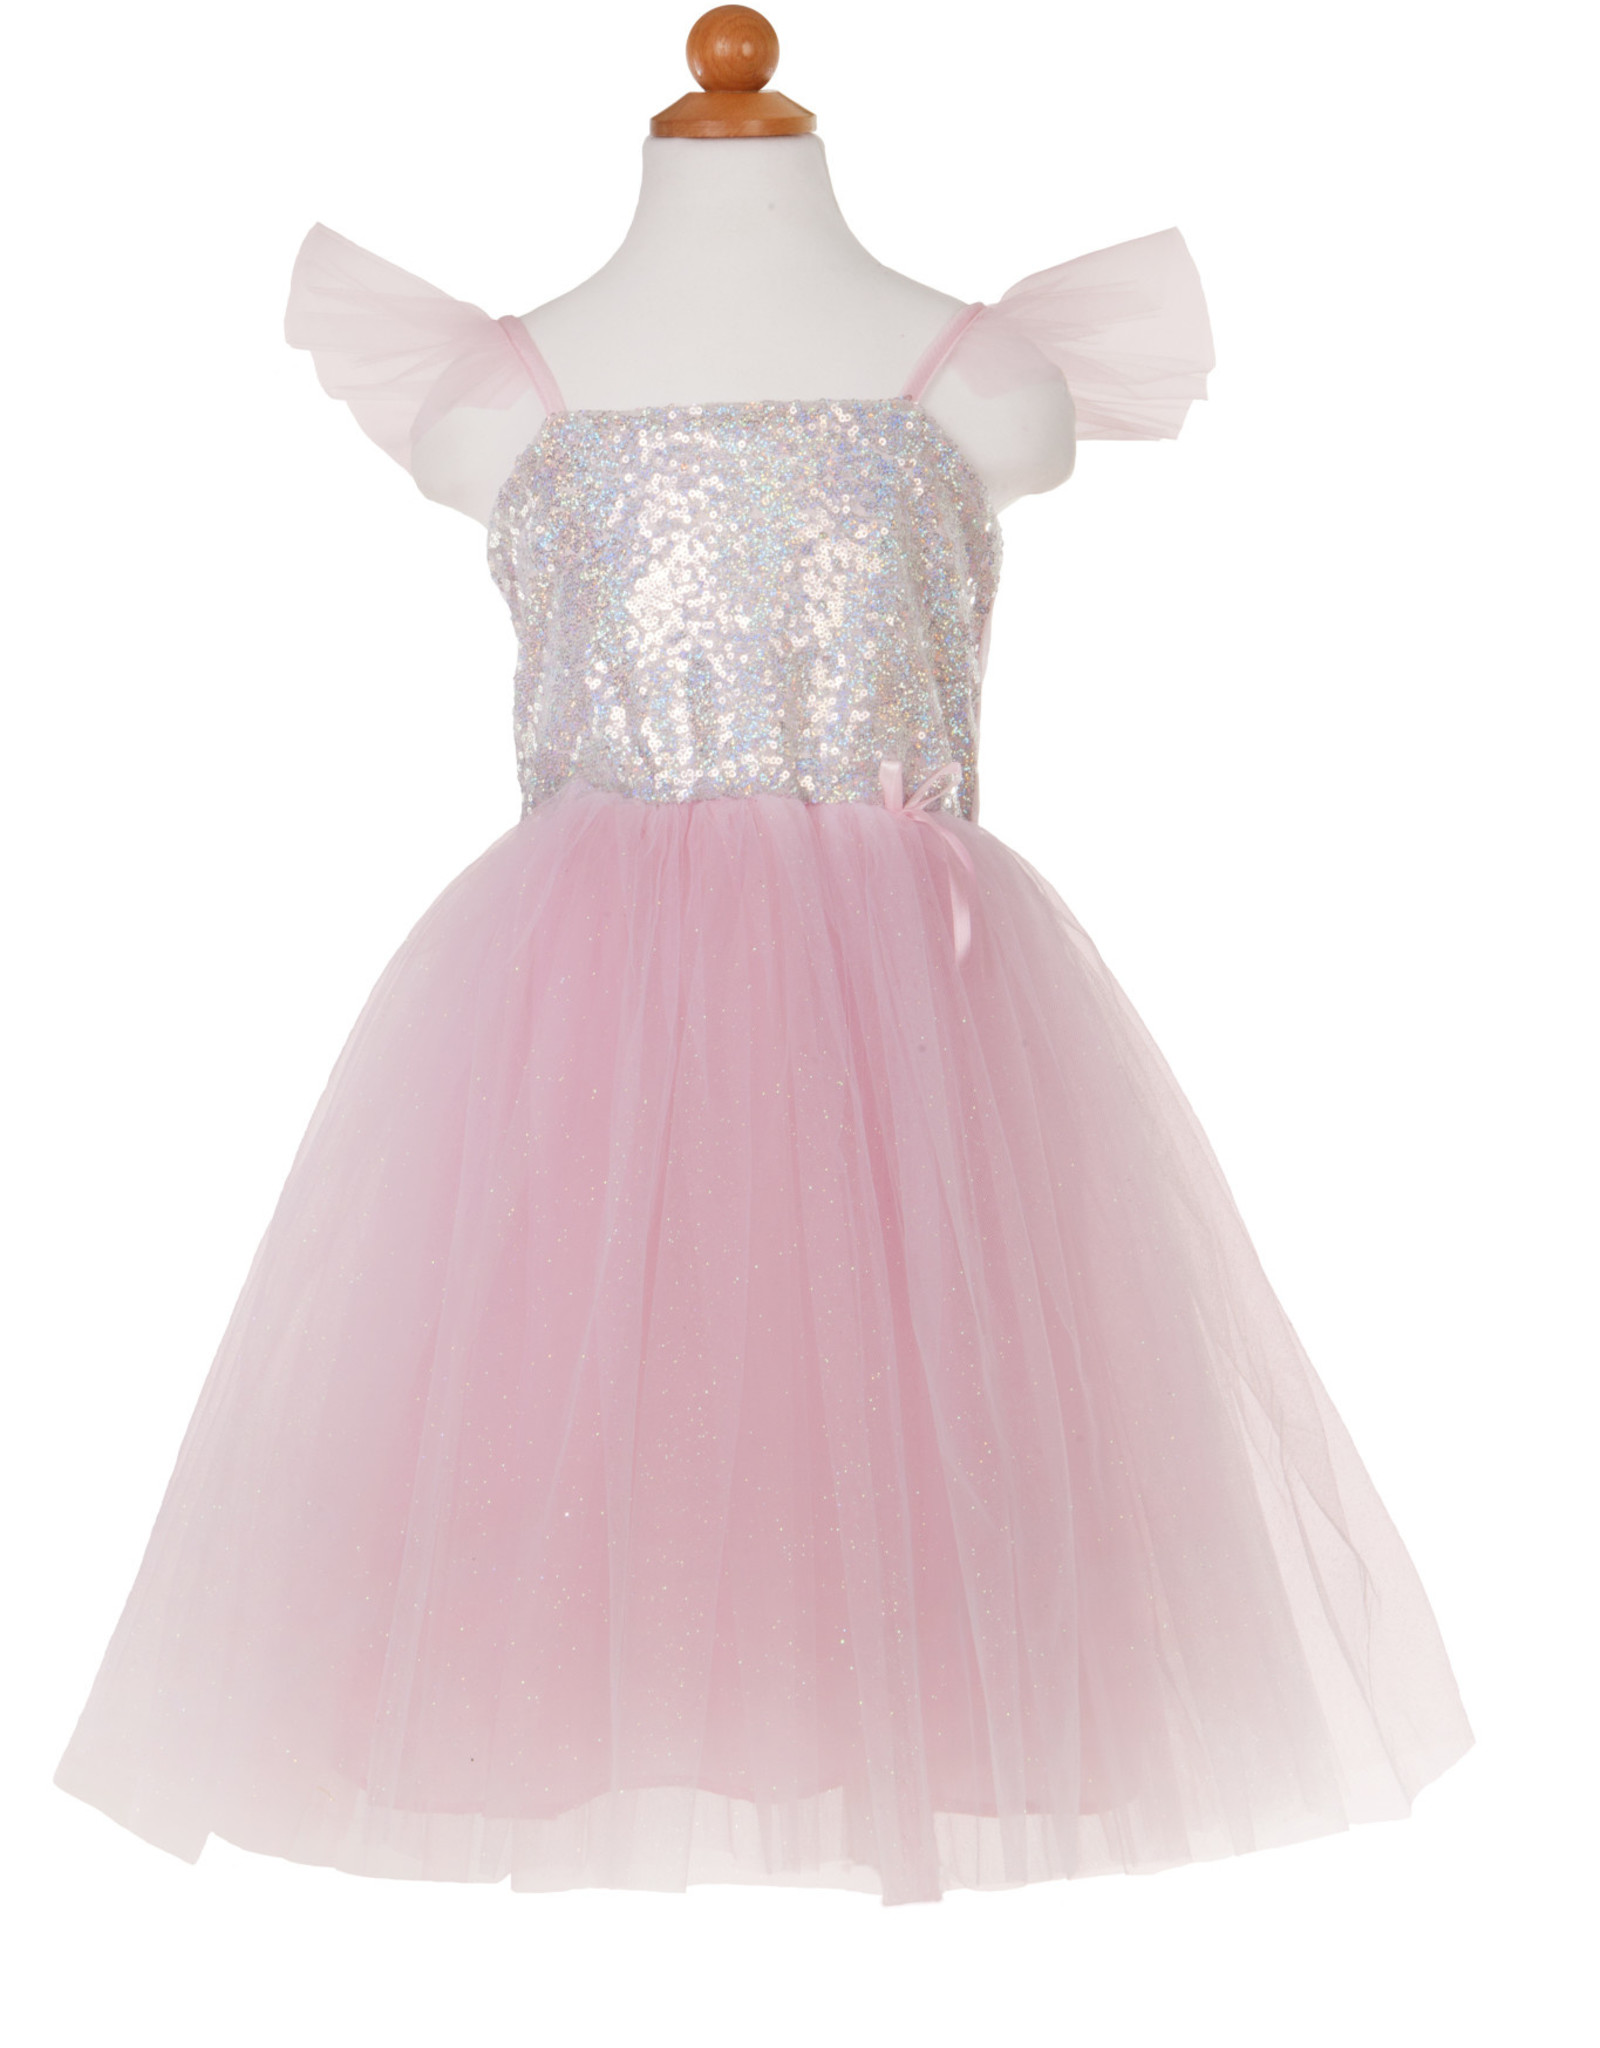 Great Pretenders Sequins Princess Dress - Pink - Size 5-6